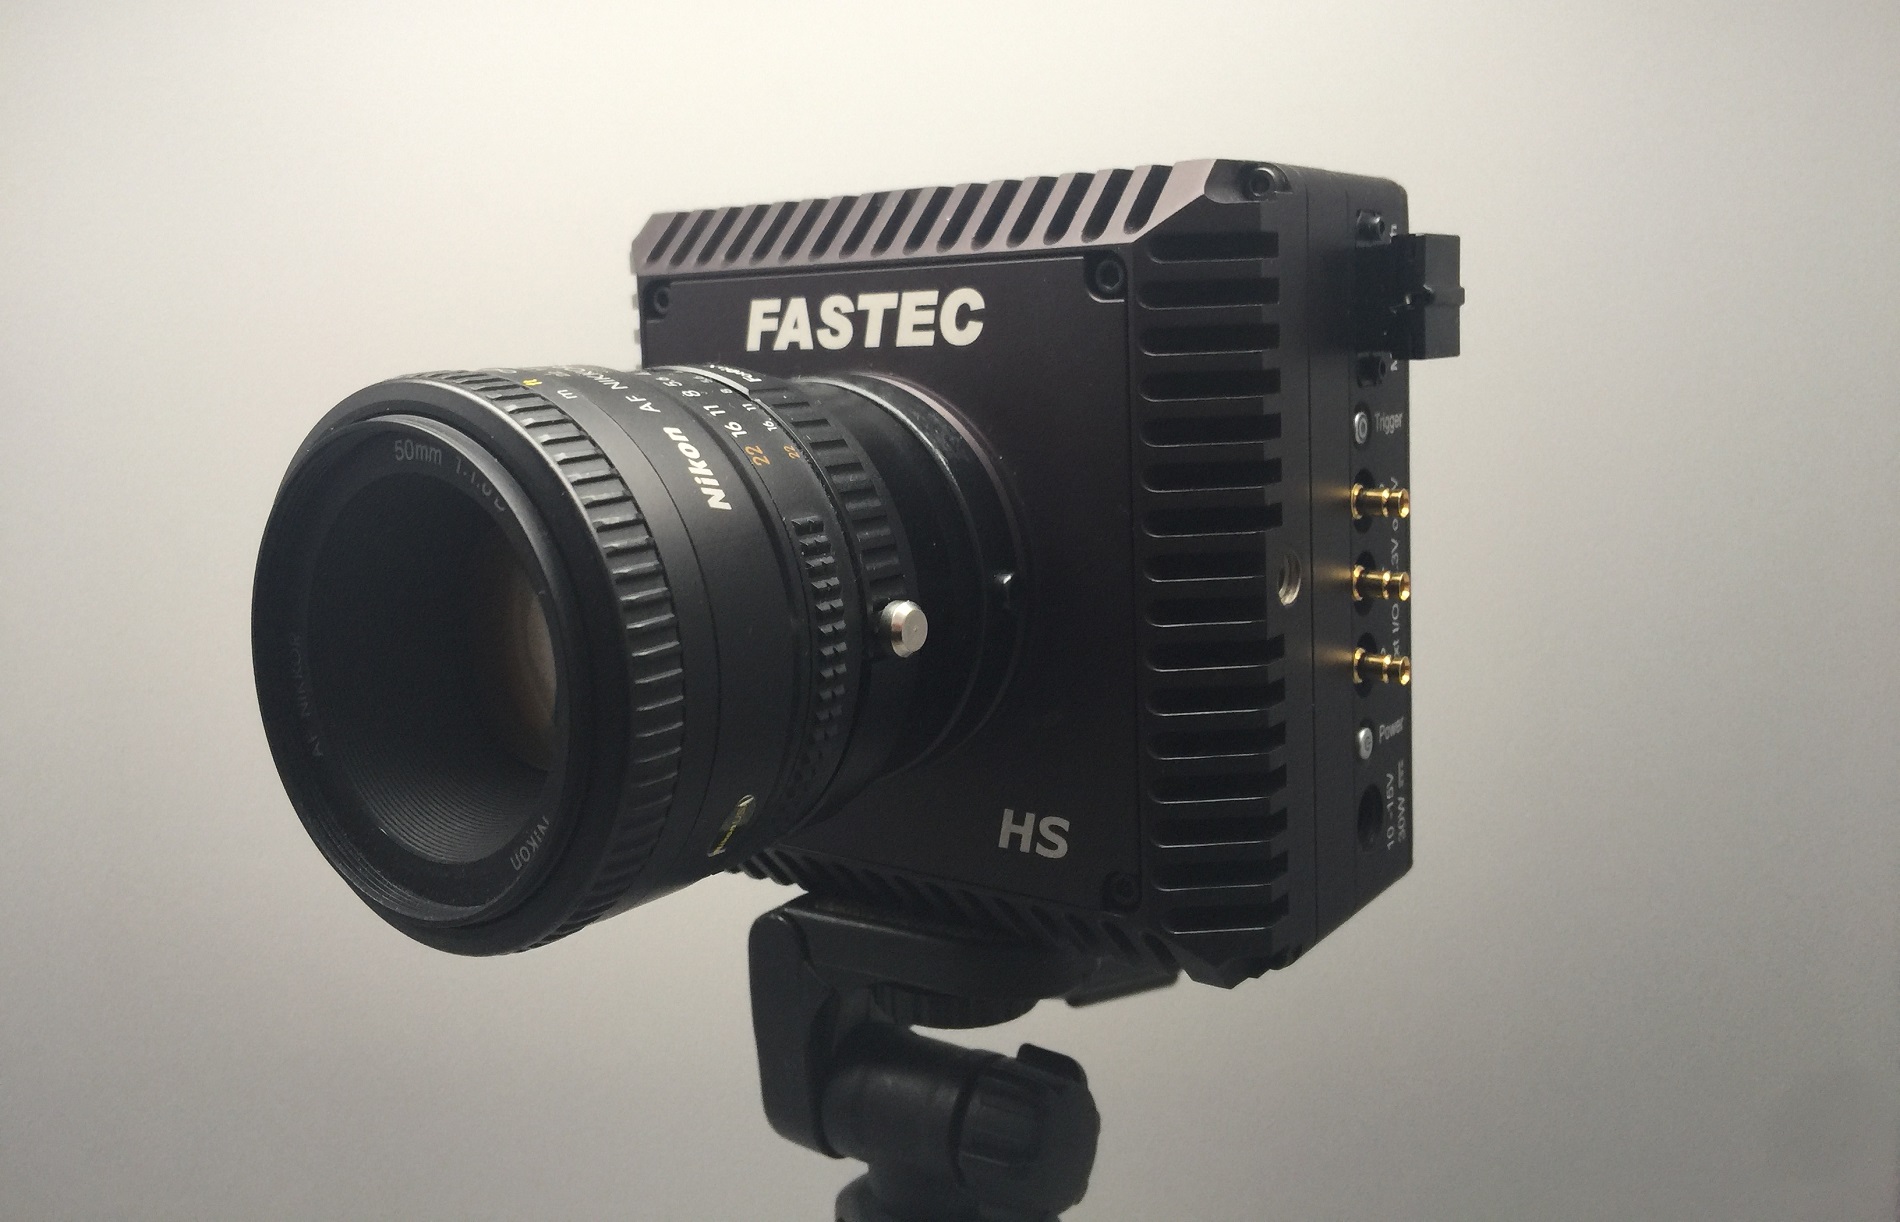 The HS7 camera